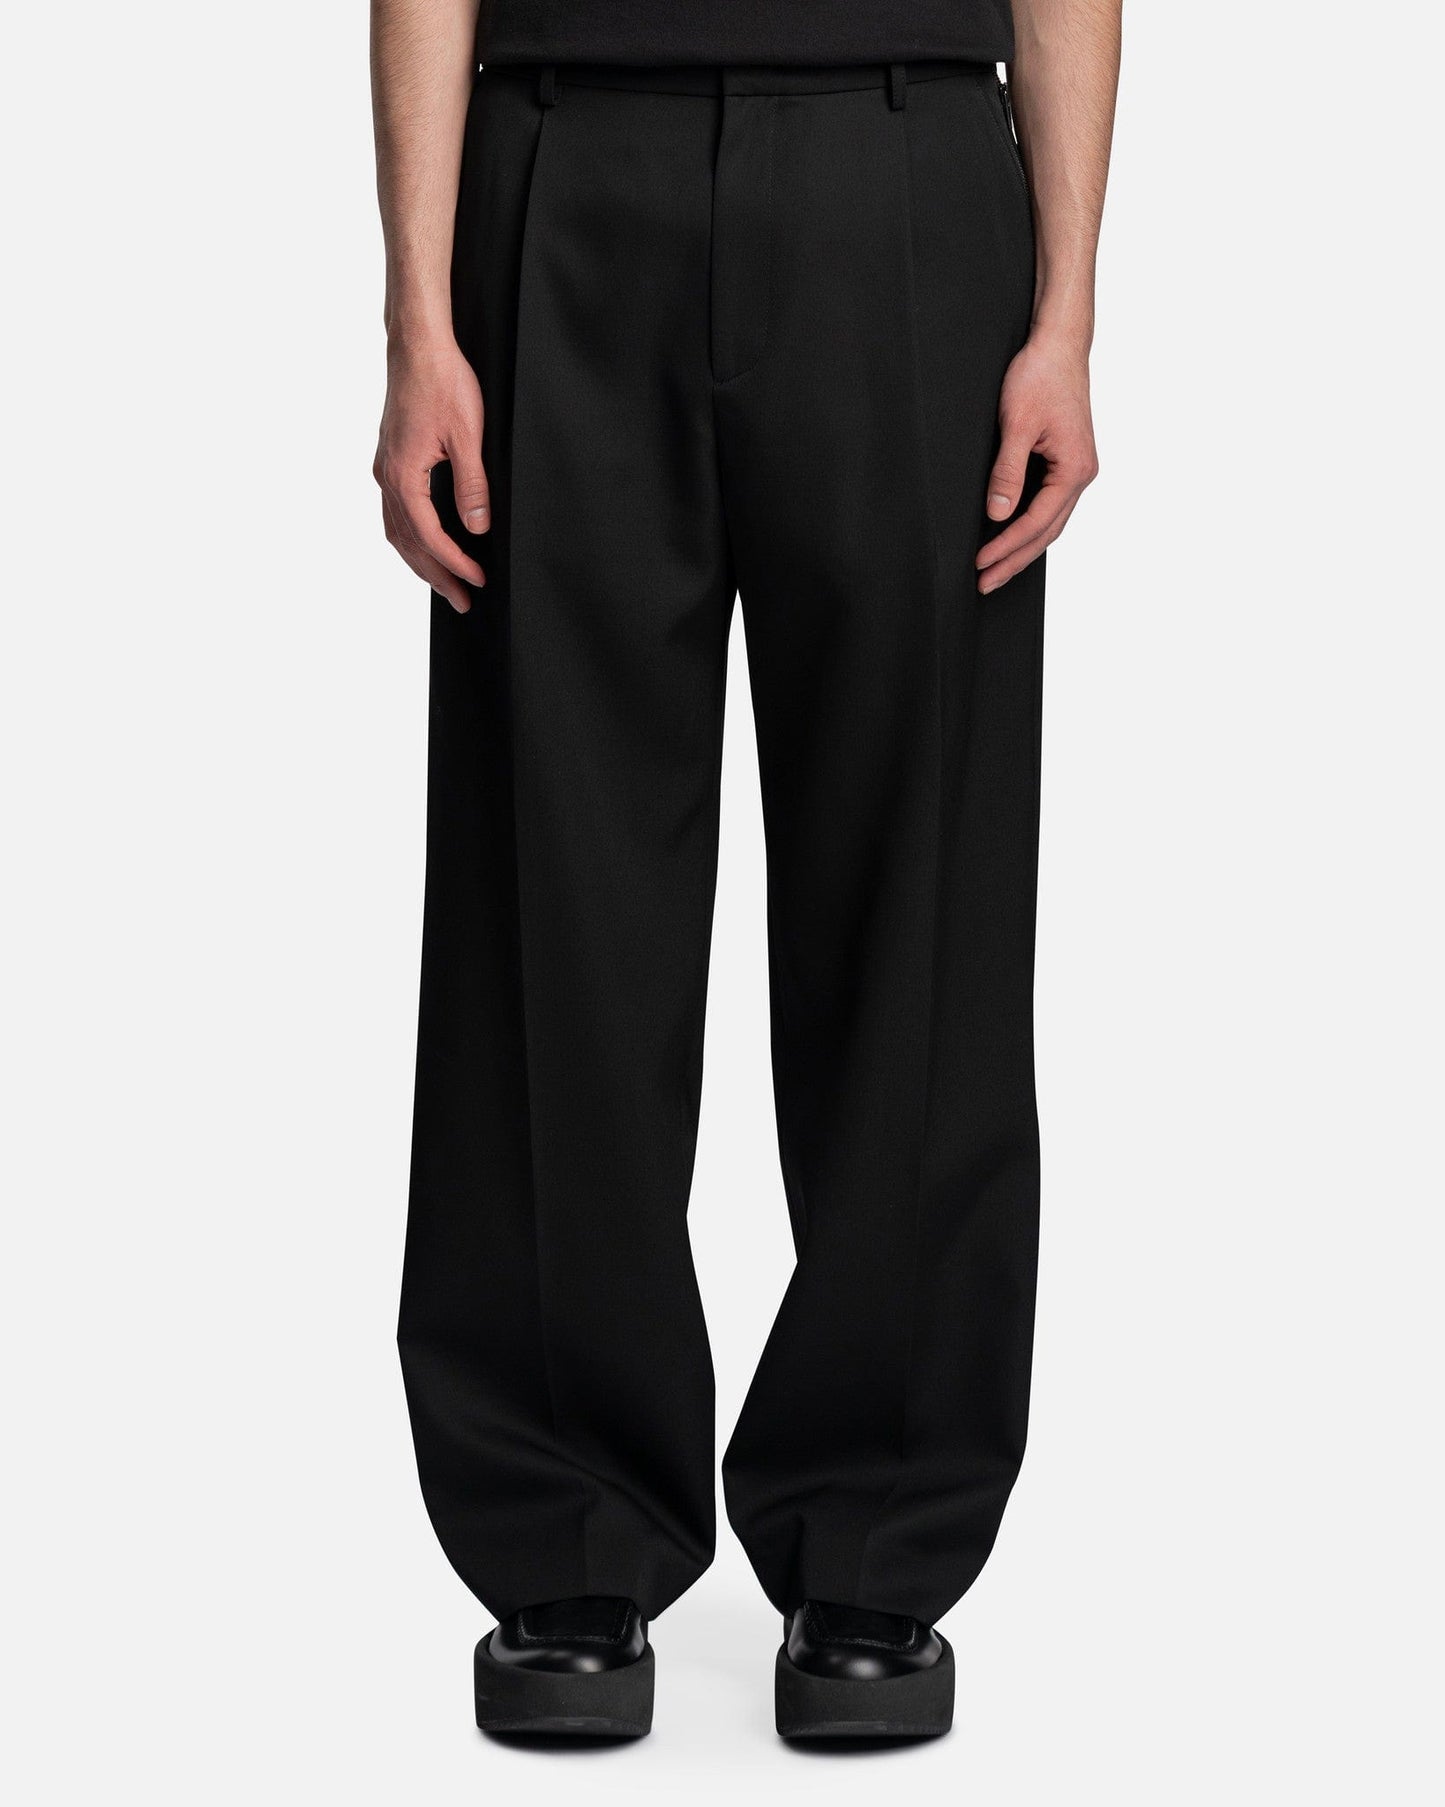 Juun.J Men's Pants One Tuck Pants with Zip Pocket in Black